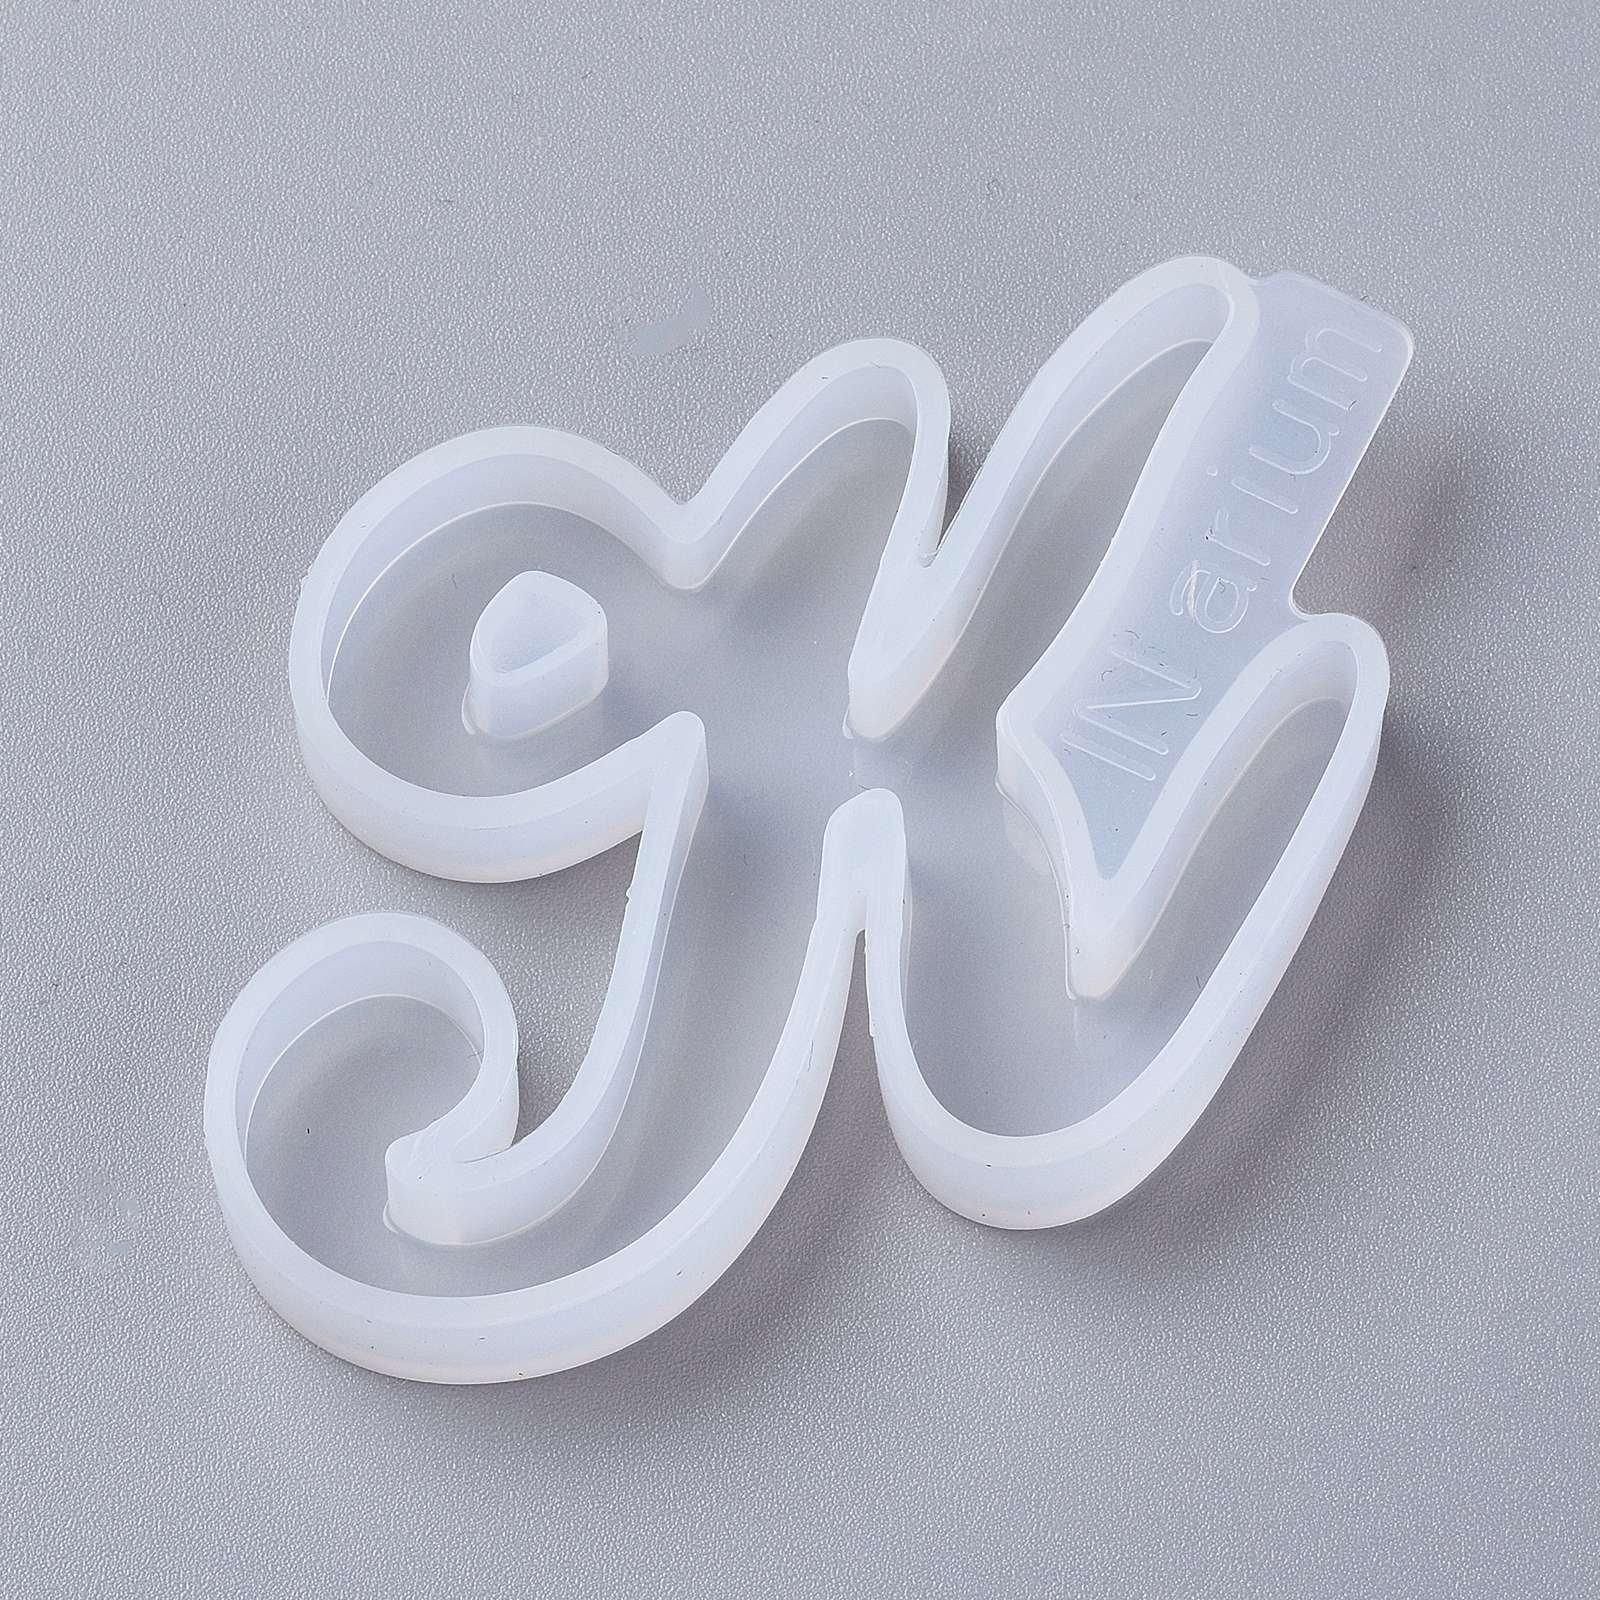 Letter DIY Silicone Molds, For UV Resin, Epoxy Resin Jewelry Making, Letter.K, 52x63x8mm, Inner Diameter: 37x49mm